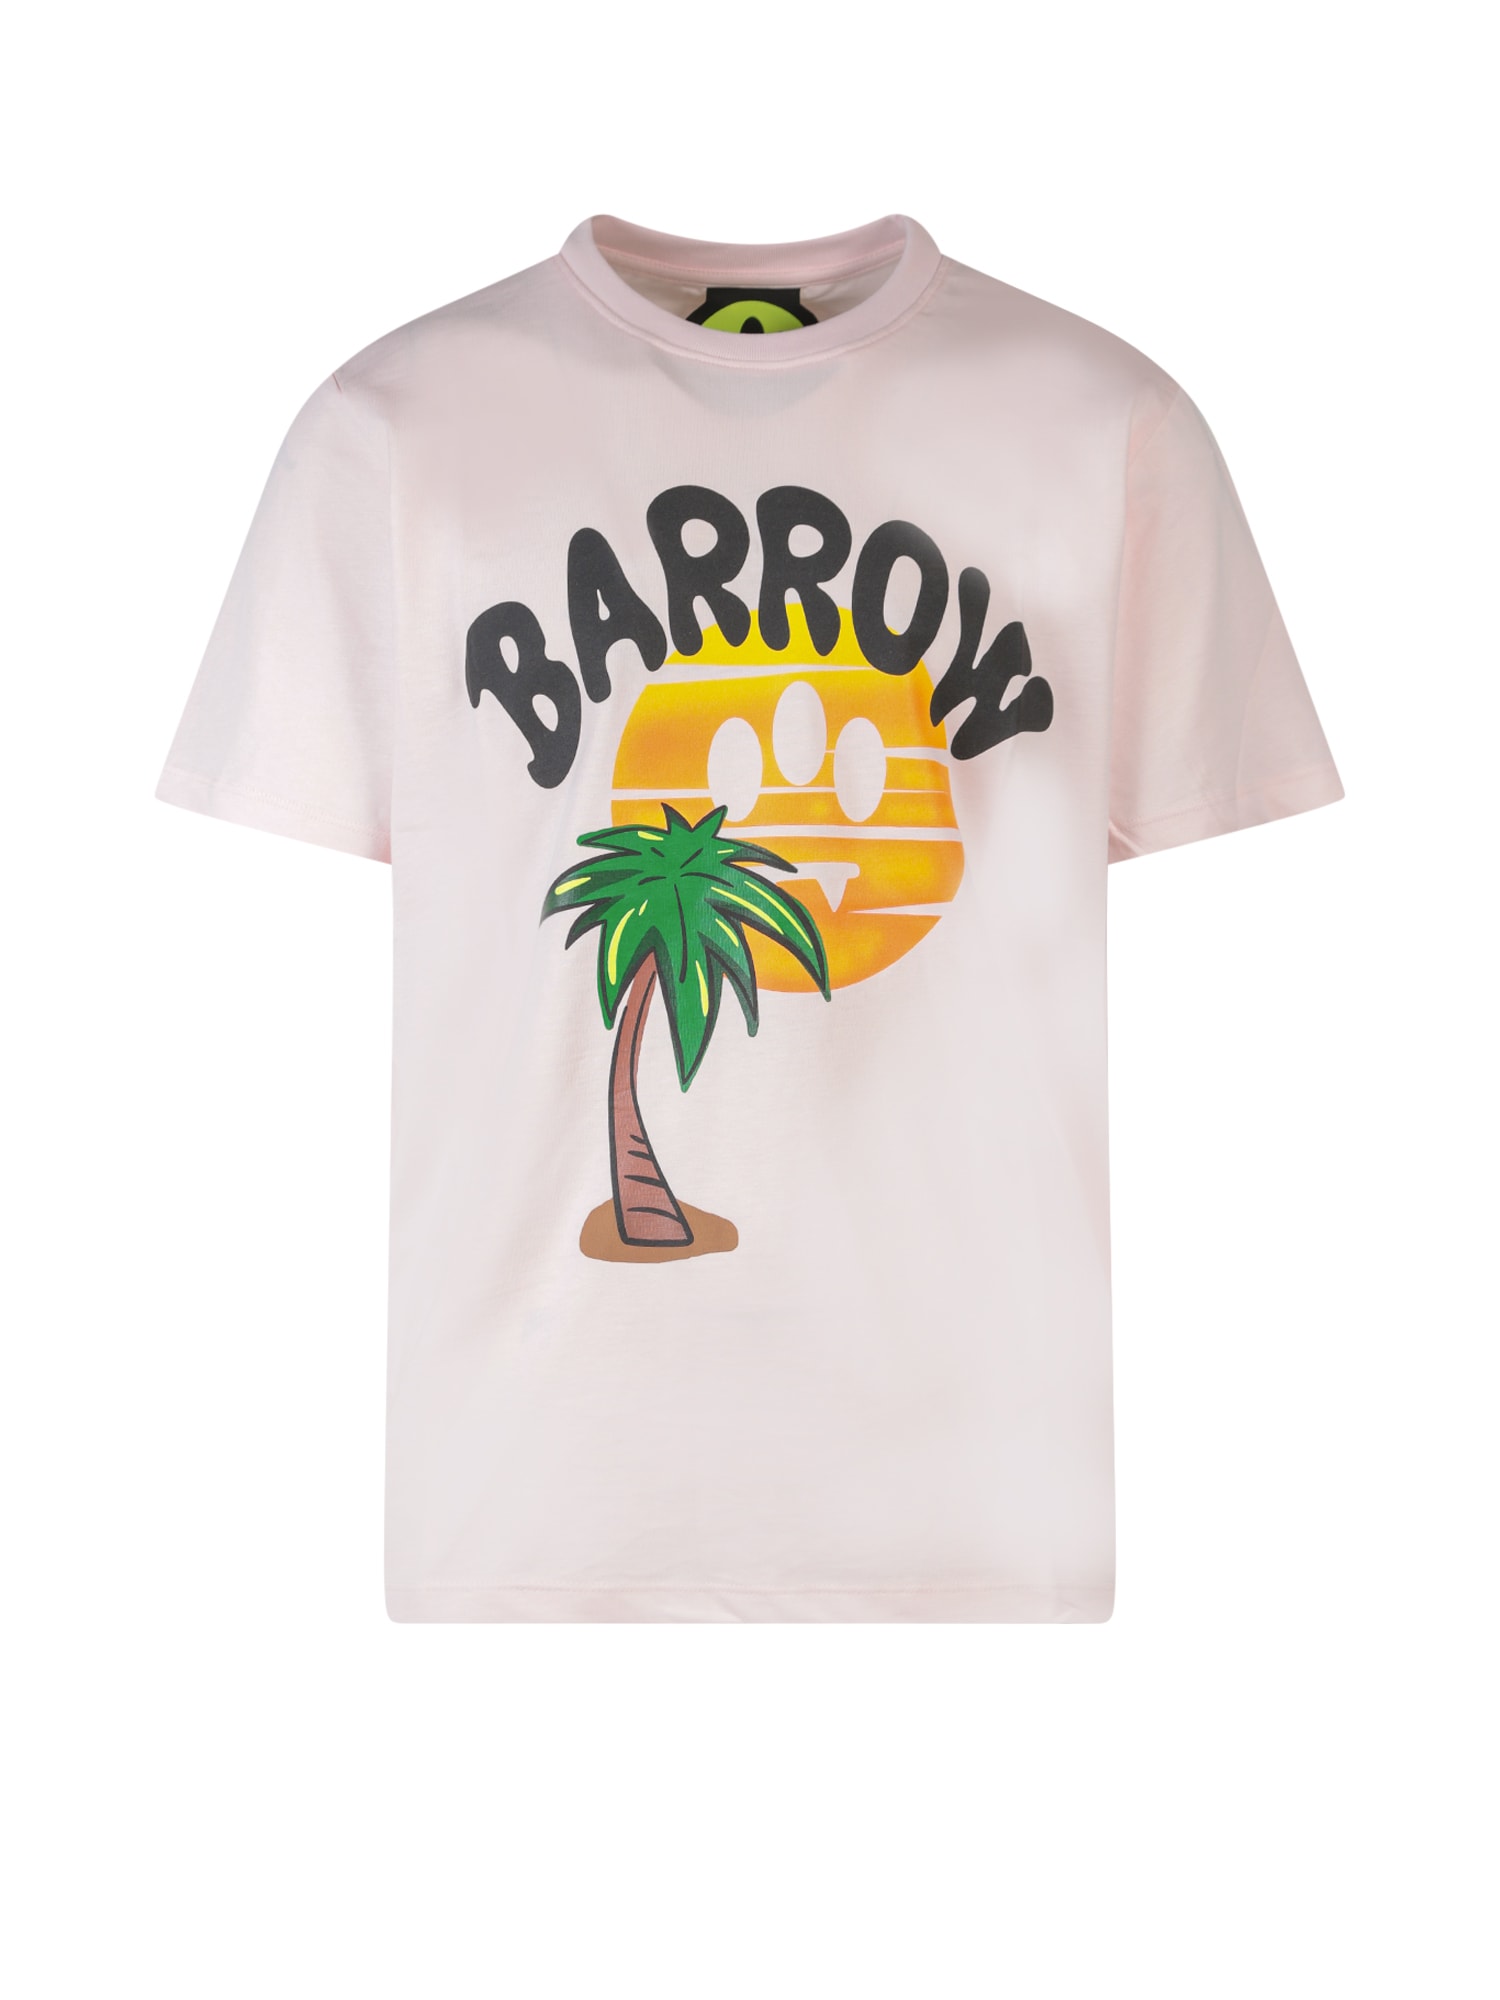 BARROW T-SHIRT